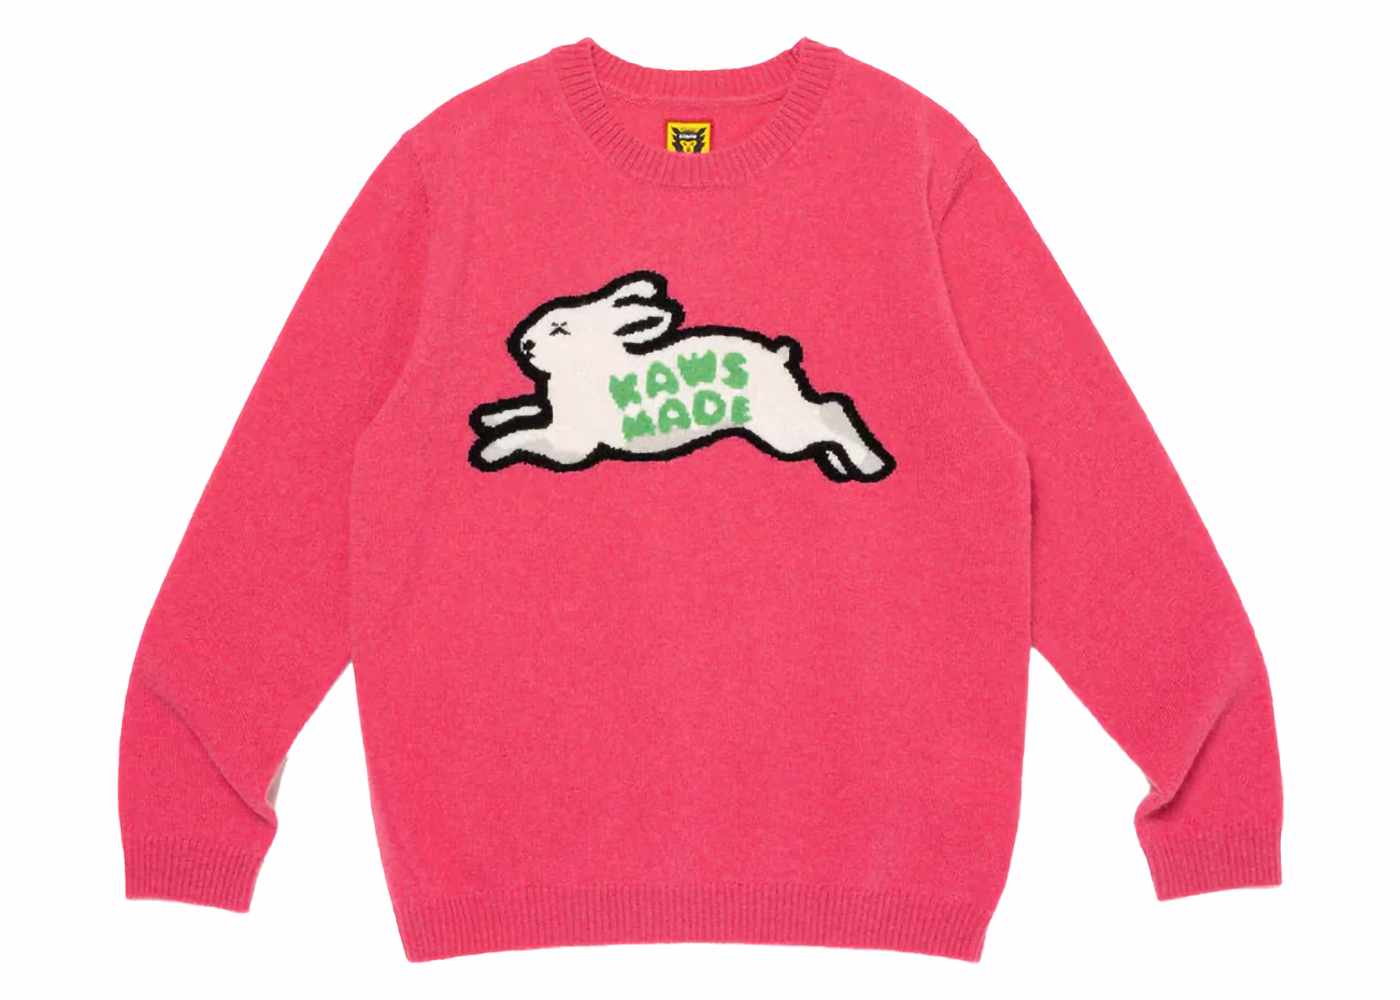 Human Made x KAWS Kids Knit Sweater Pink